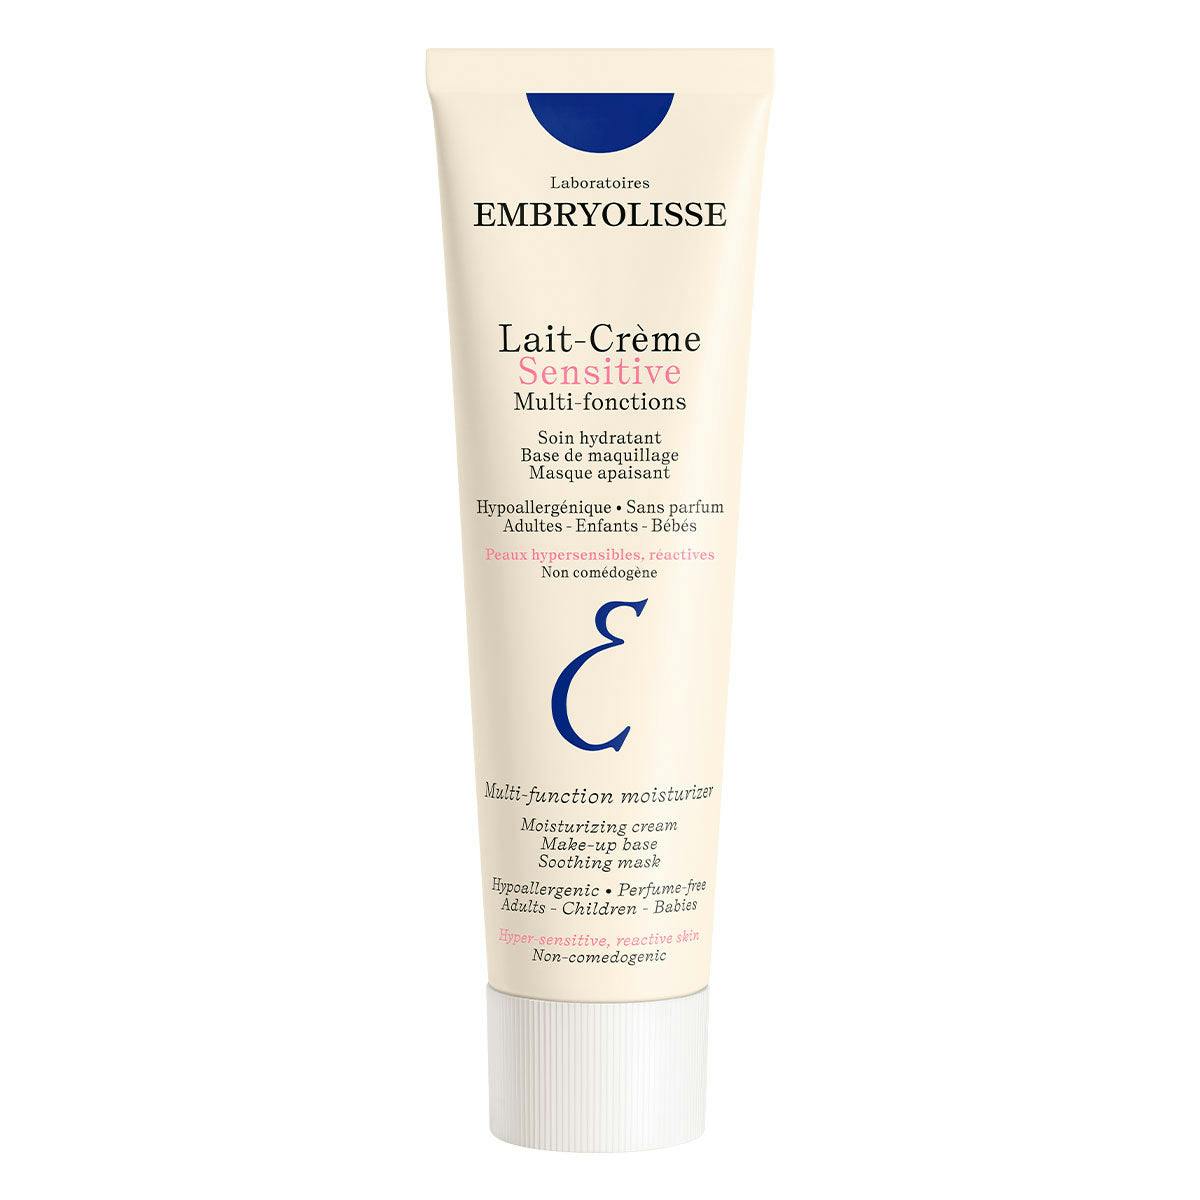 Embryolisse Lait-Creme Sensitive Cream 100ml